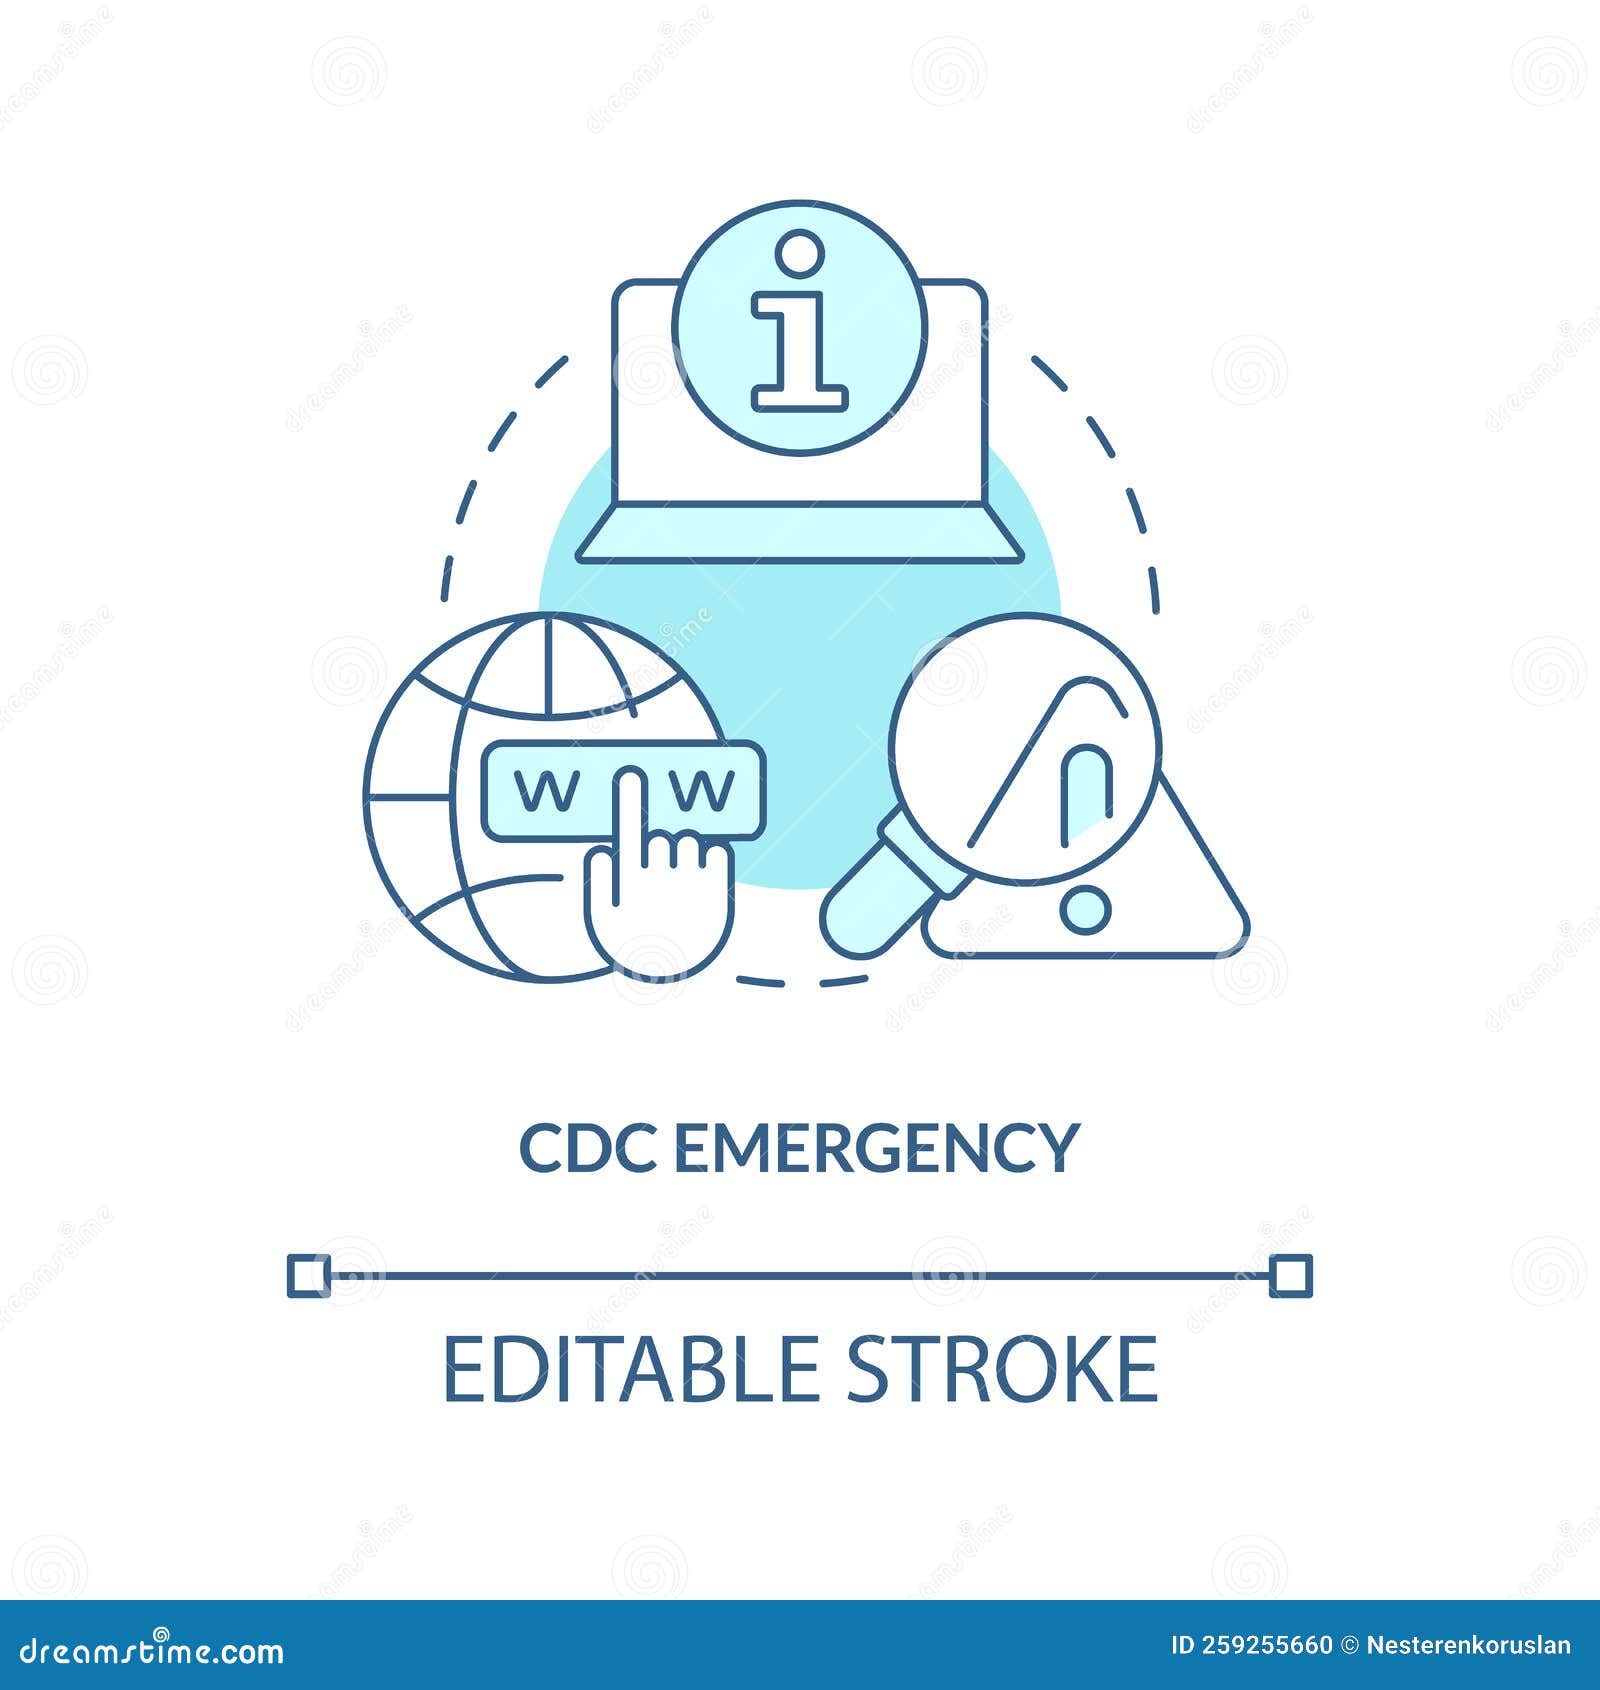 cdc emergency turquoise concept icon